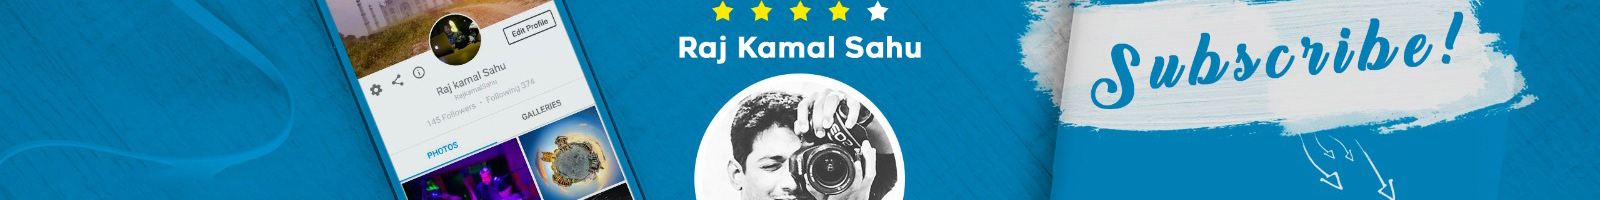 Bannière de profil de Raj Kamal Sahu